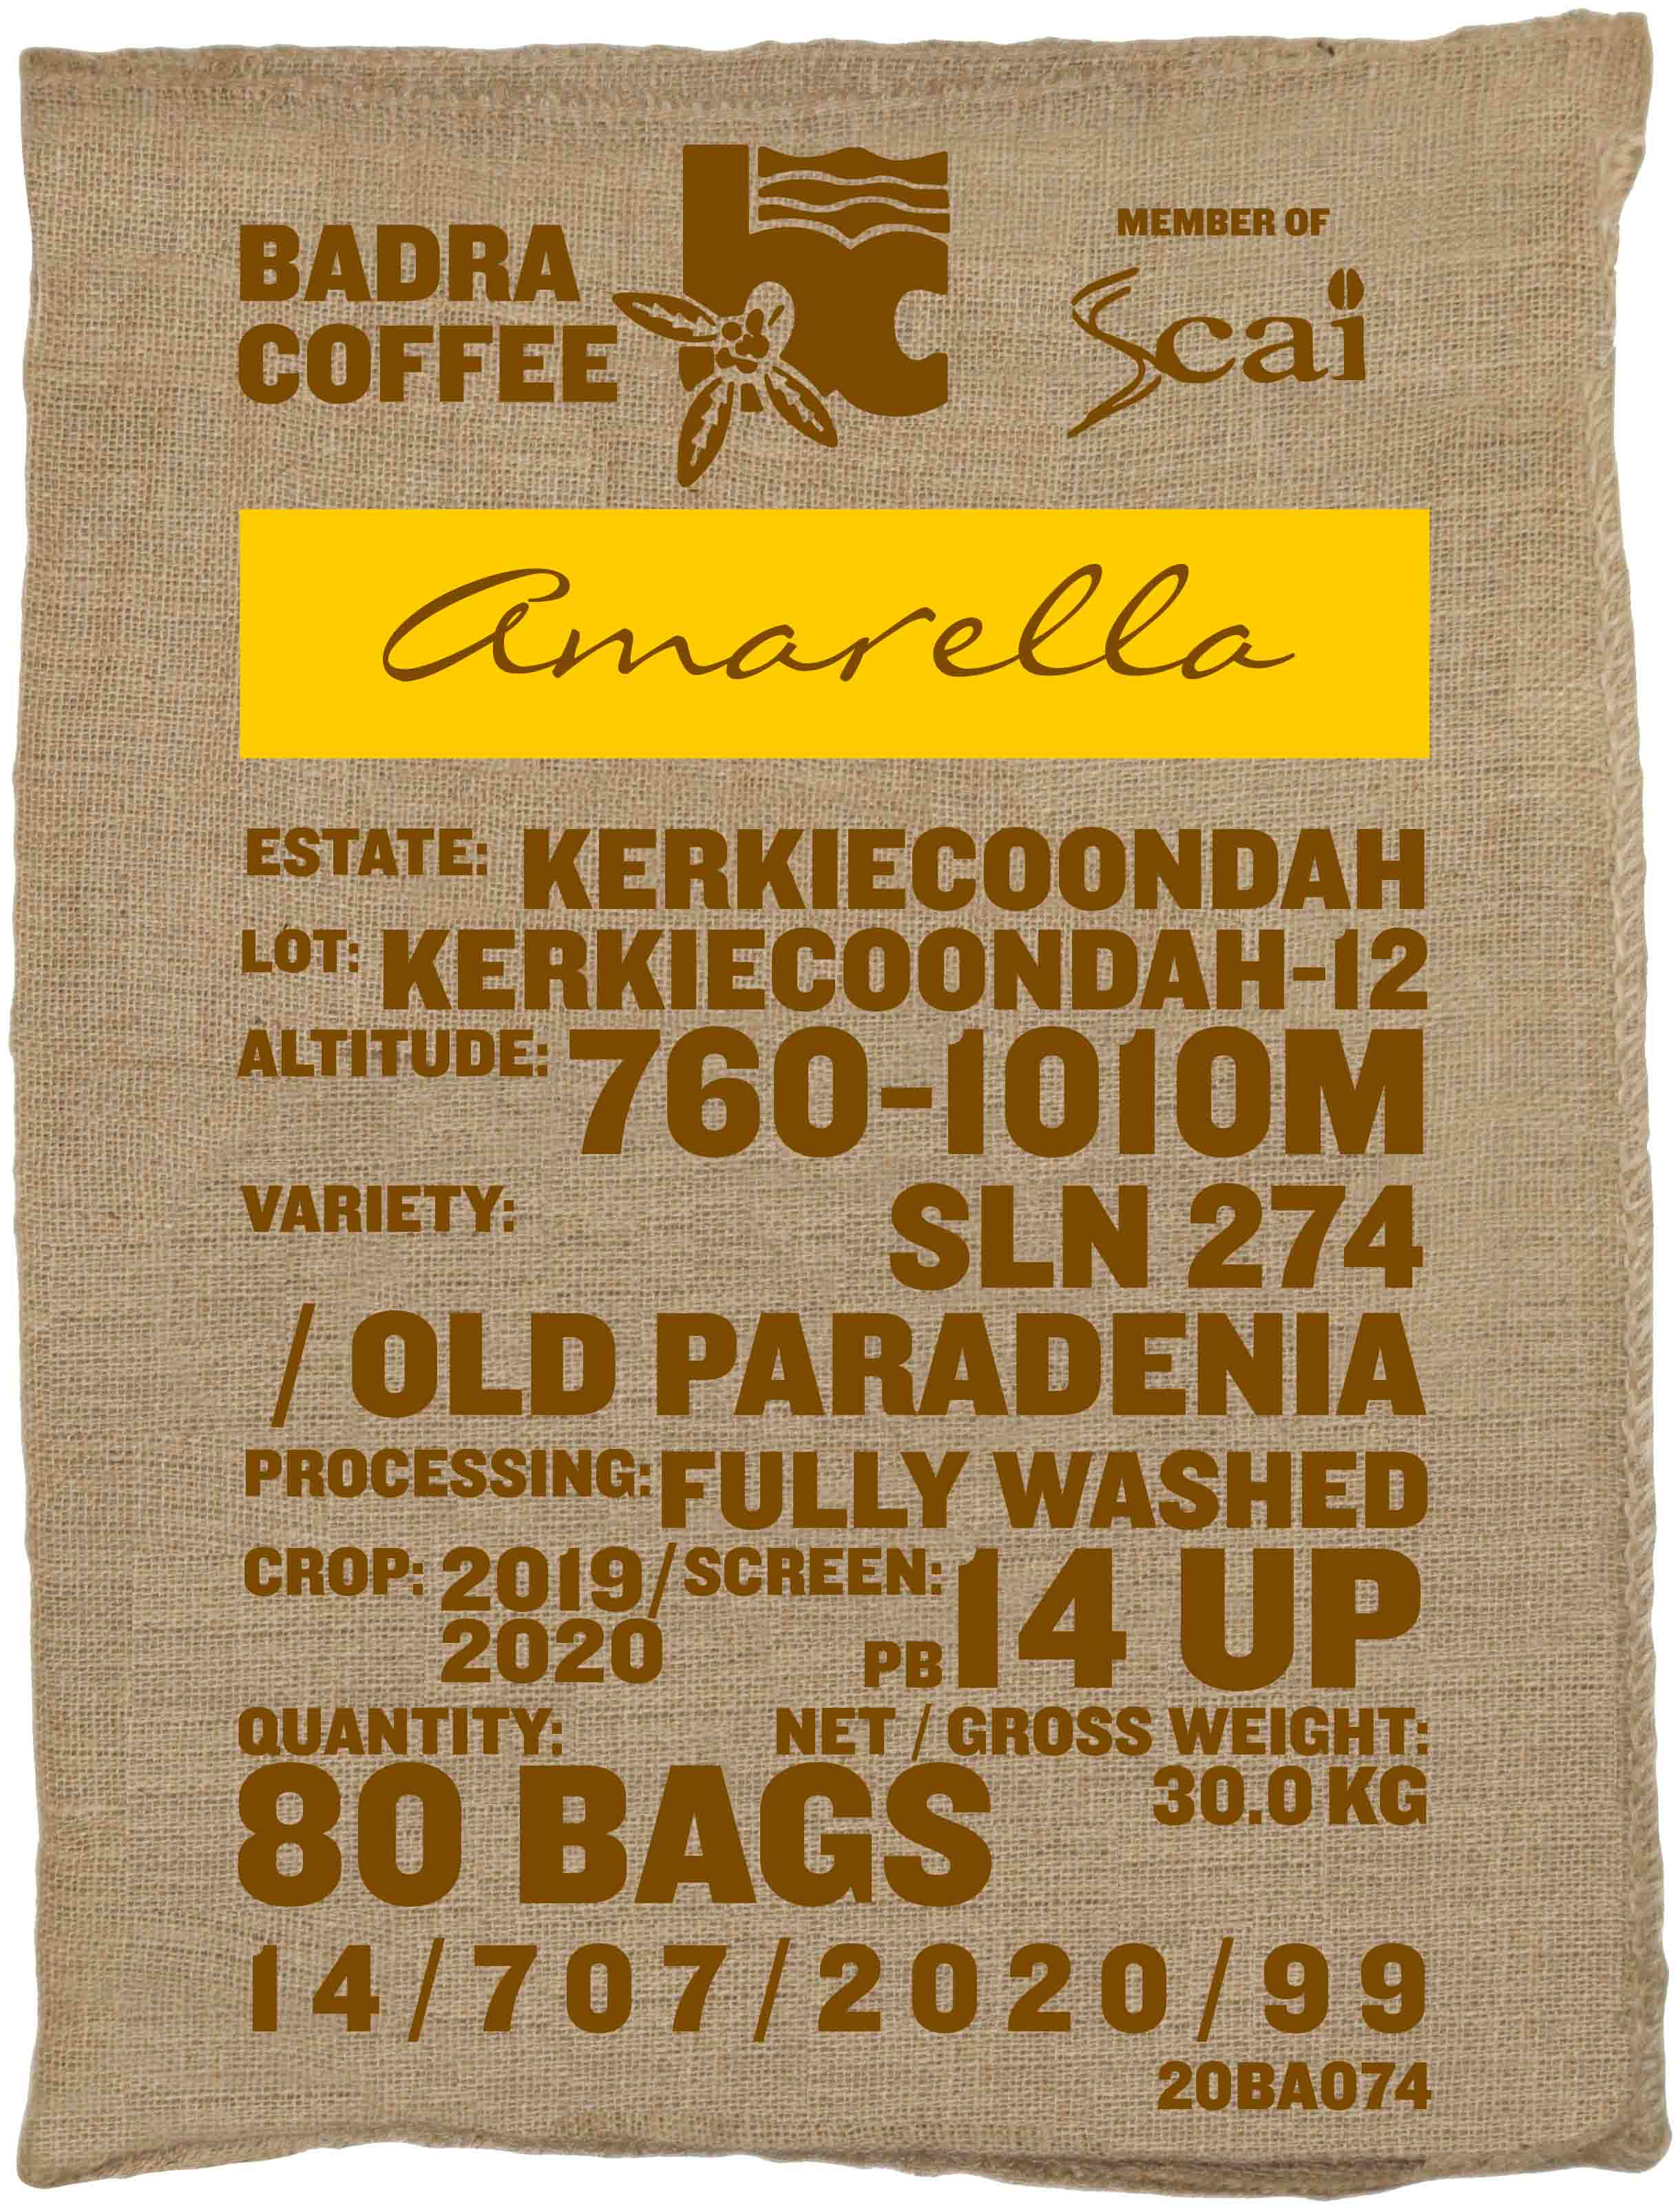 Ein Rohkaffeesack amarella Parzellenkaffee Varietät SLN 274/Old Paradenia. Badra Estates Lot Kerkiecoondah 12.